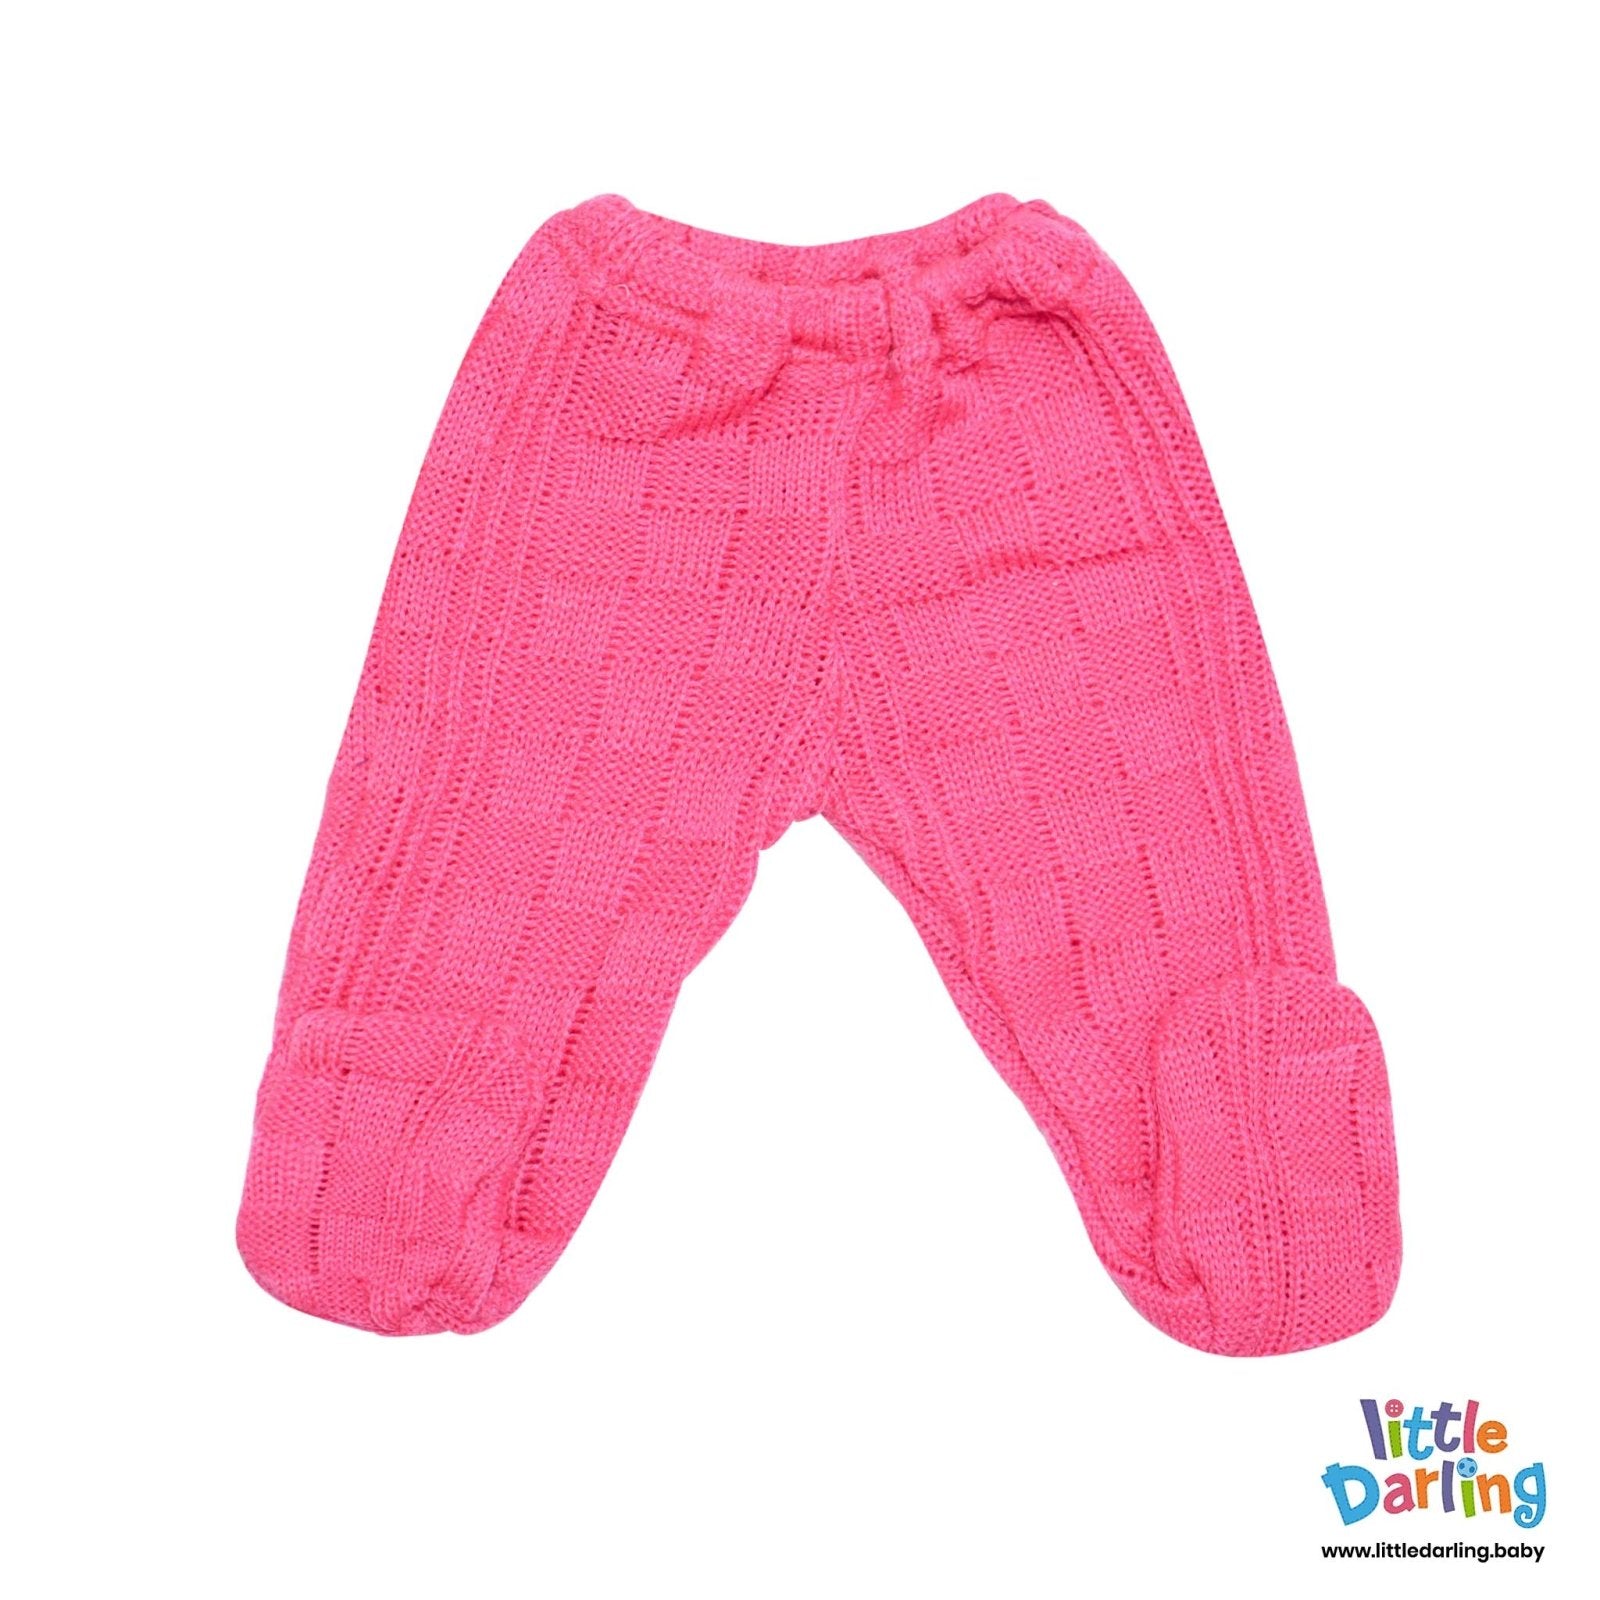 4 Pcs Woolen Gift Set Box Pattern Pink Color by Little Darling